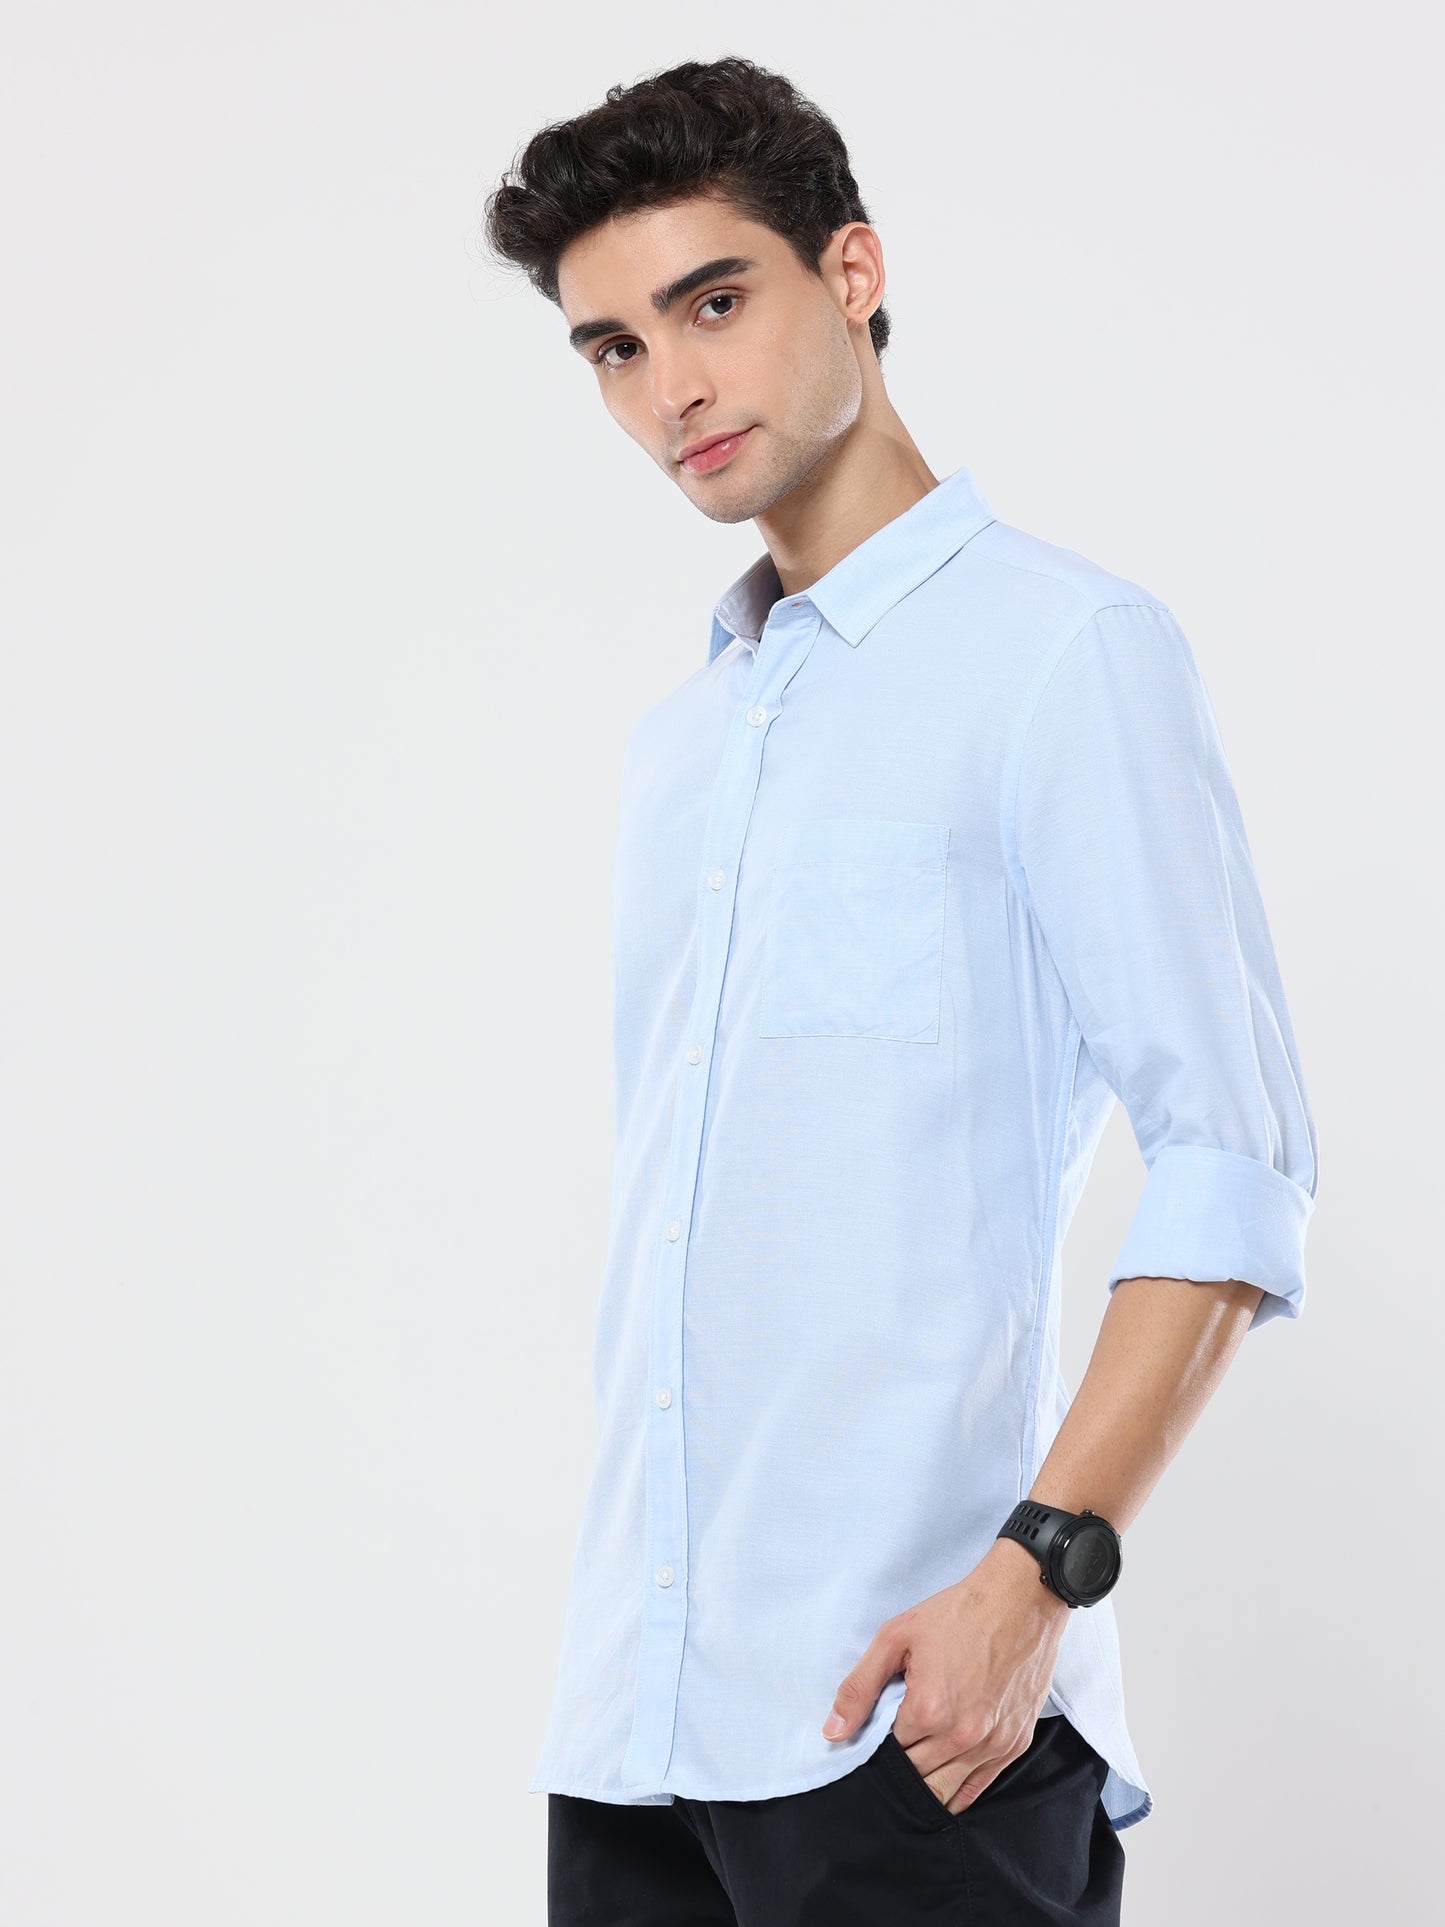 Plain Light blue Premium cotton Formal Shirt for men